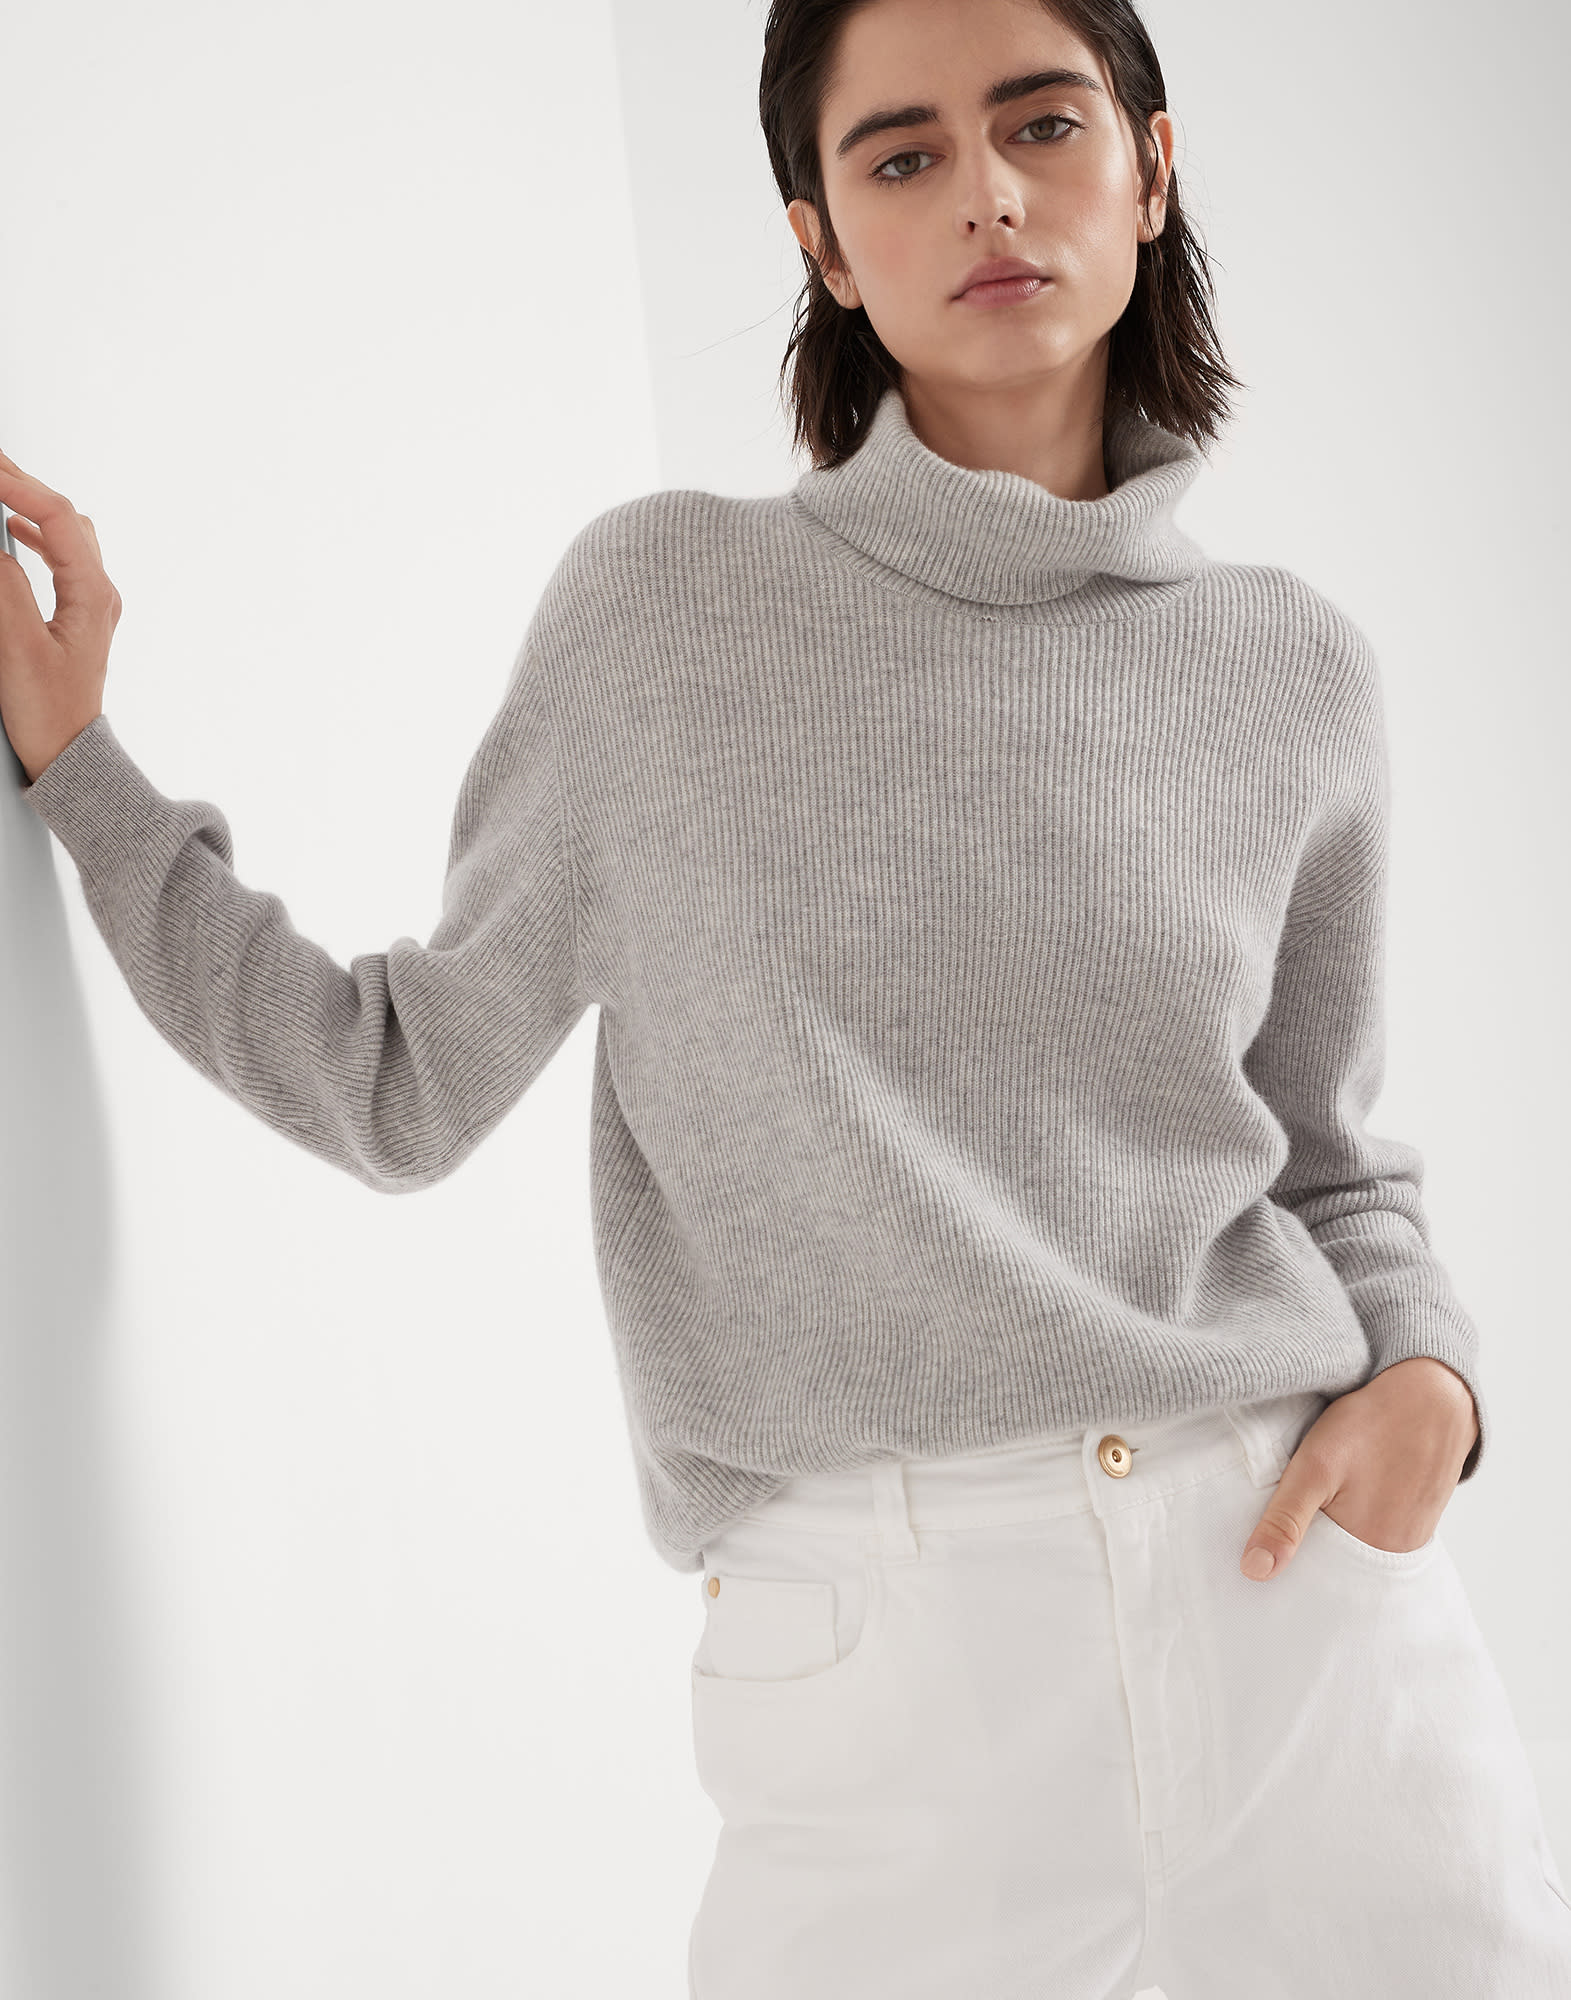 Sz M L Lulu Bravo V-Neck Collared Cashmere Sweater Black EUC